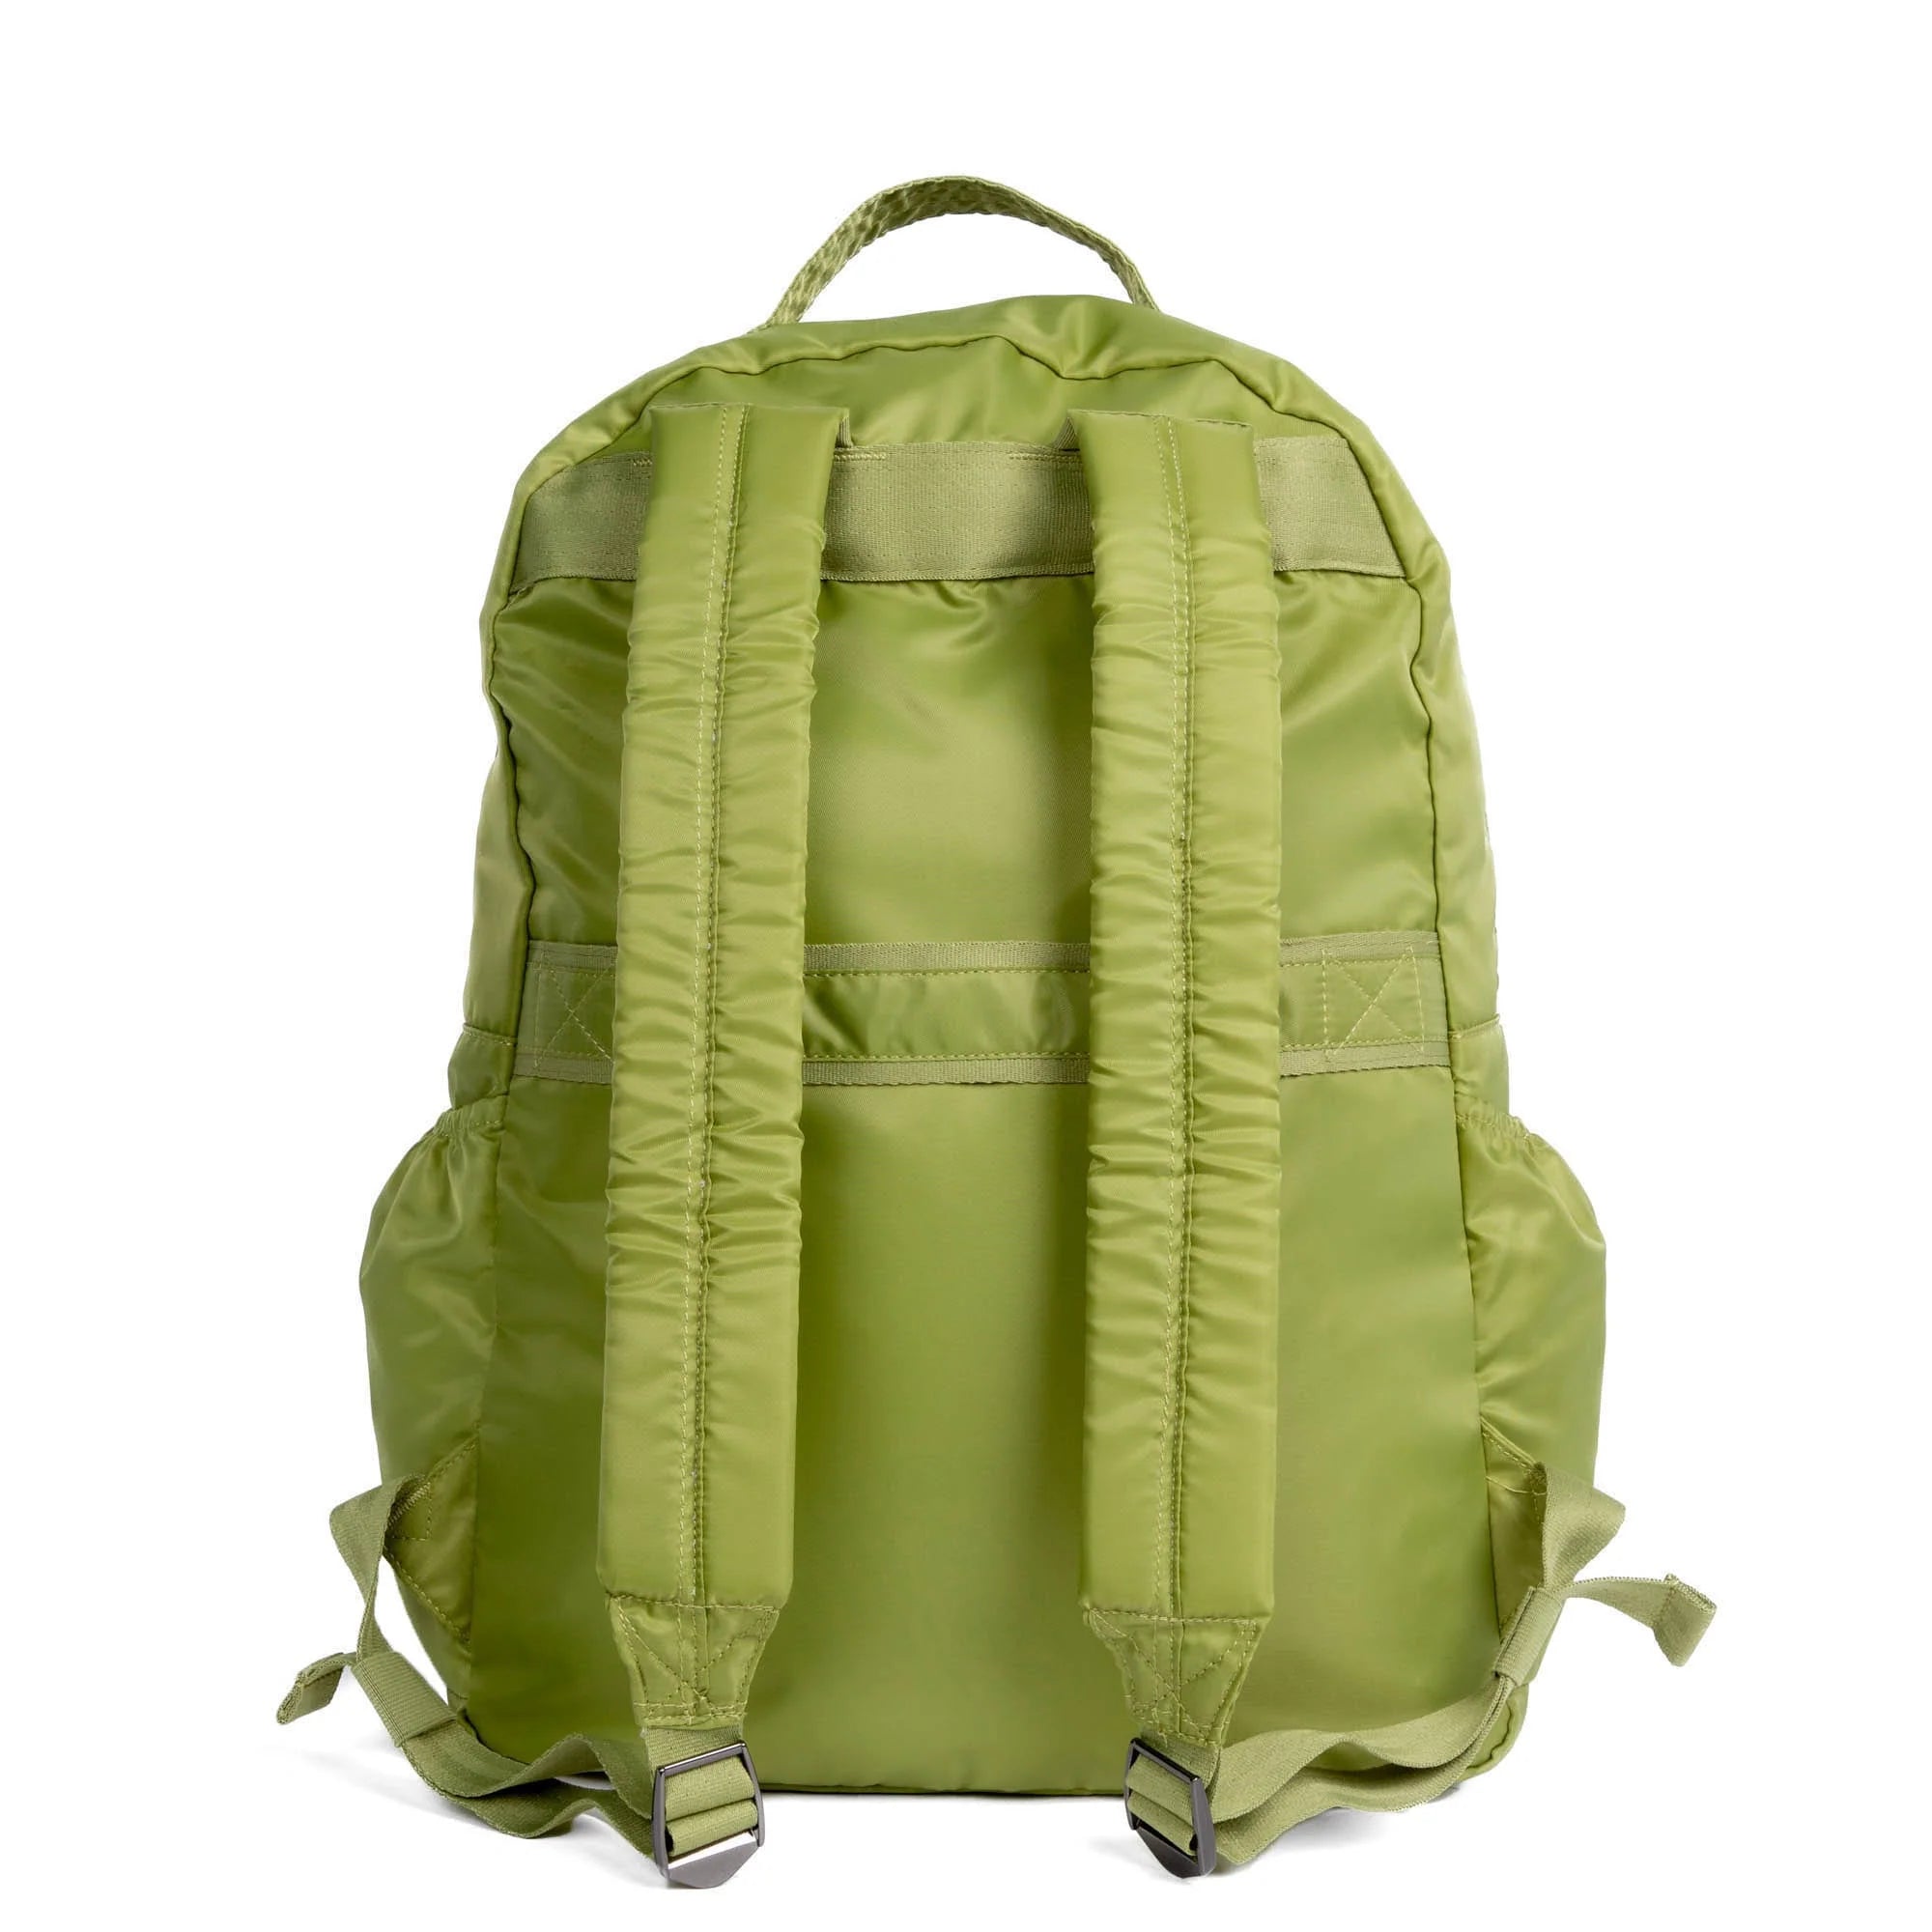 Puddle Jumper SE Packable Backpack- Grass Green